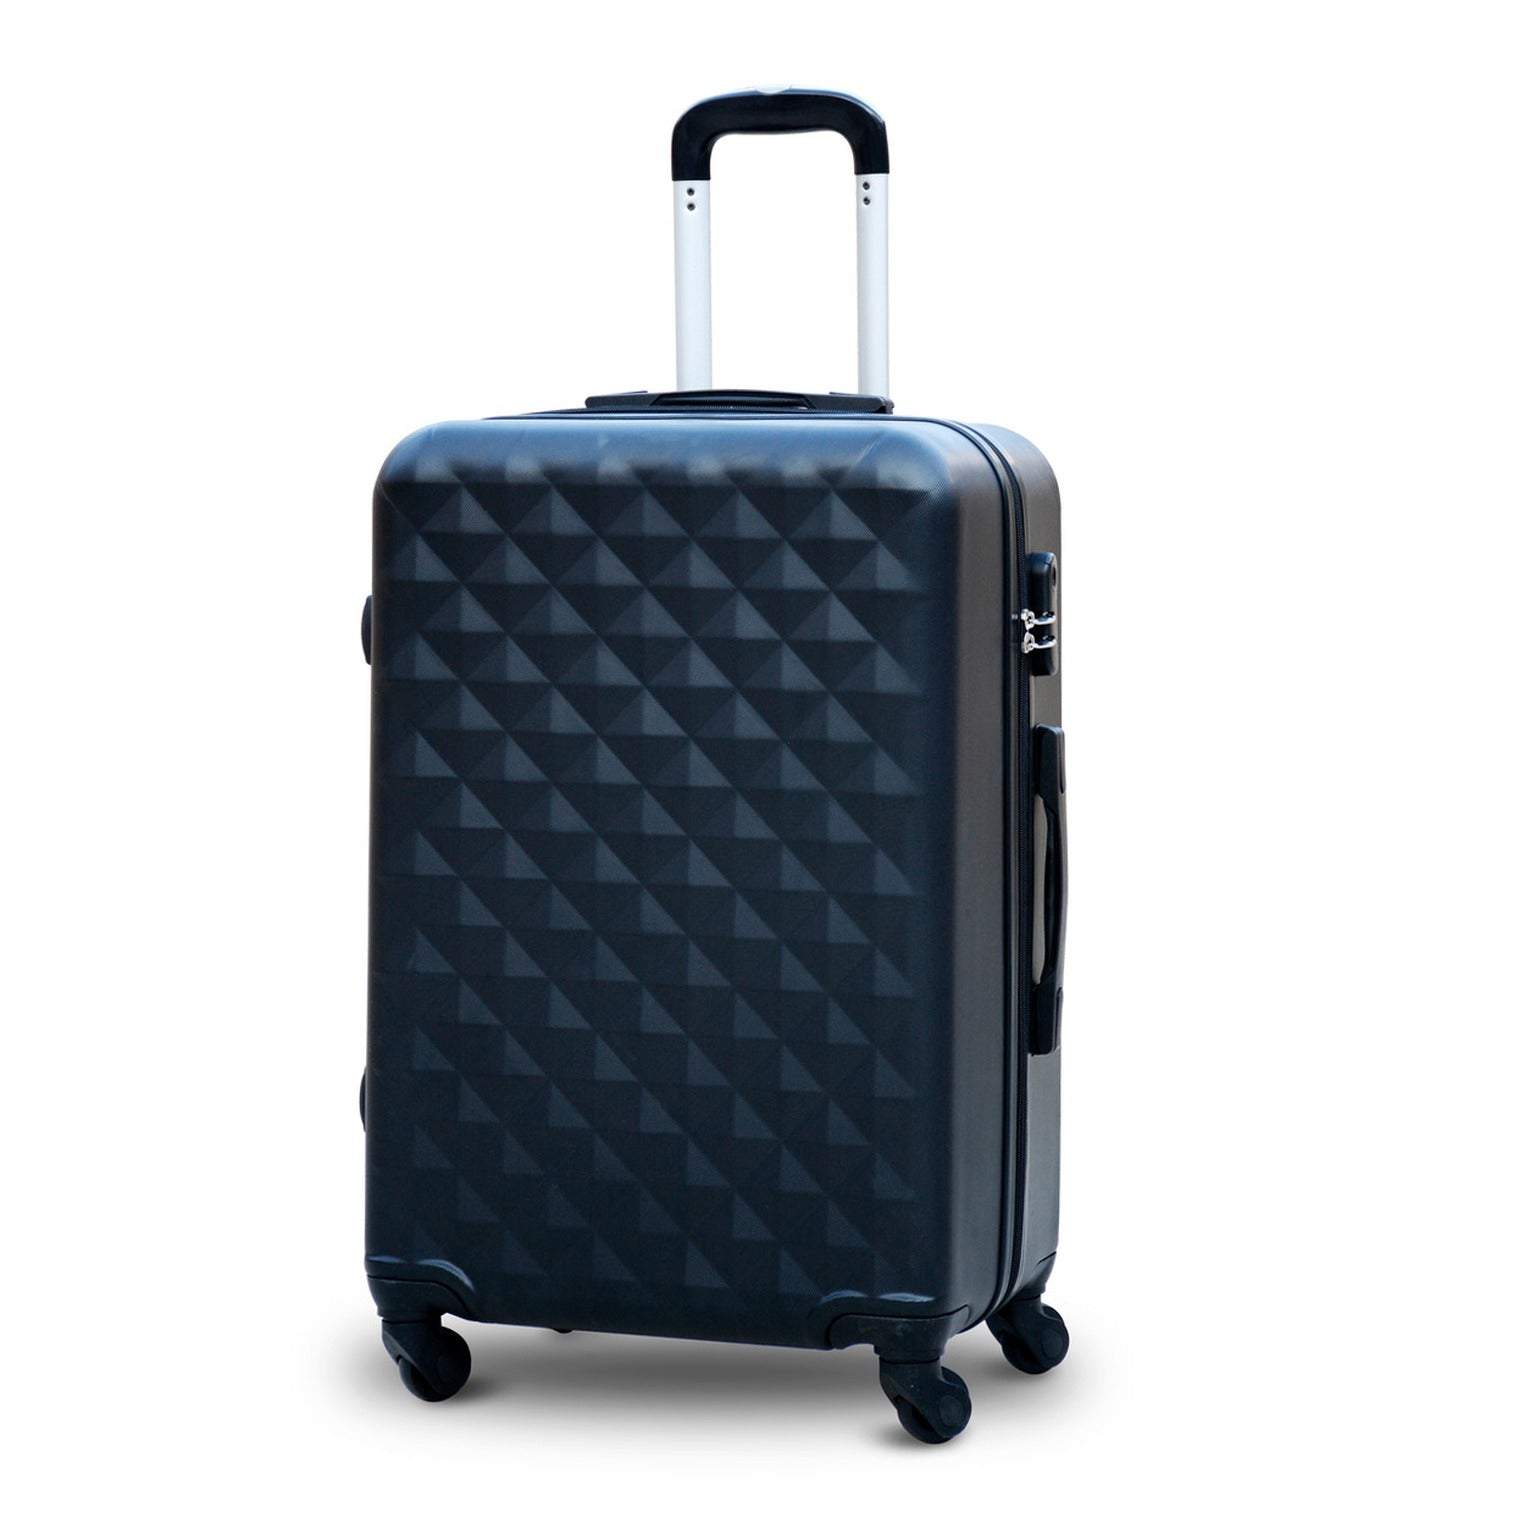 28" Black Diamond Cut ABS Lightweight Luggage Bag With Spinner Wheel